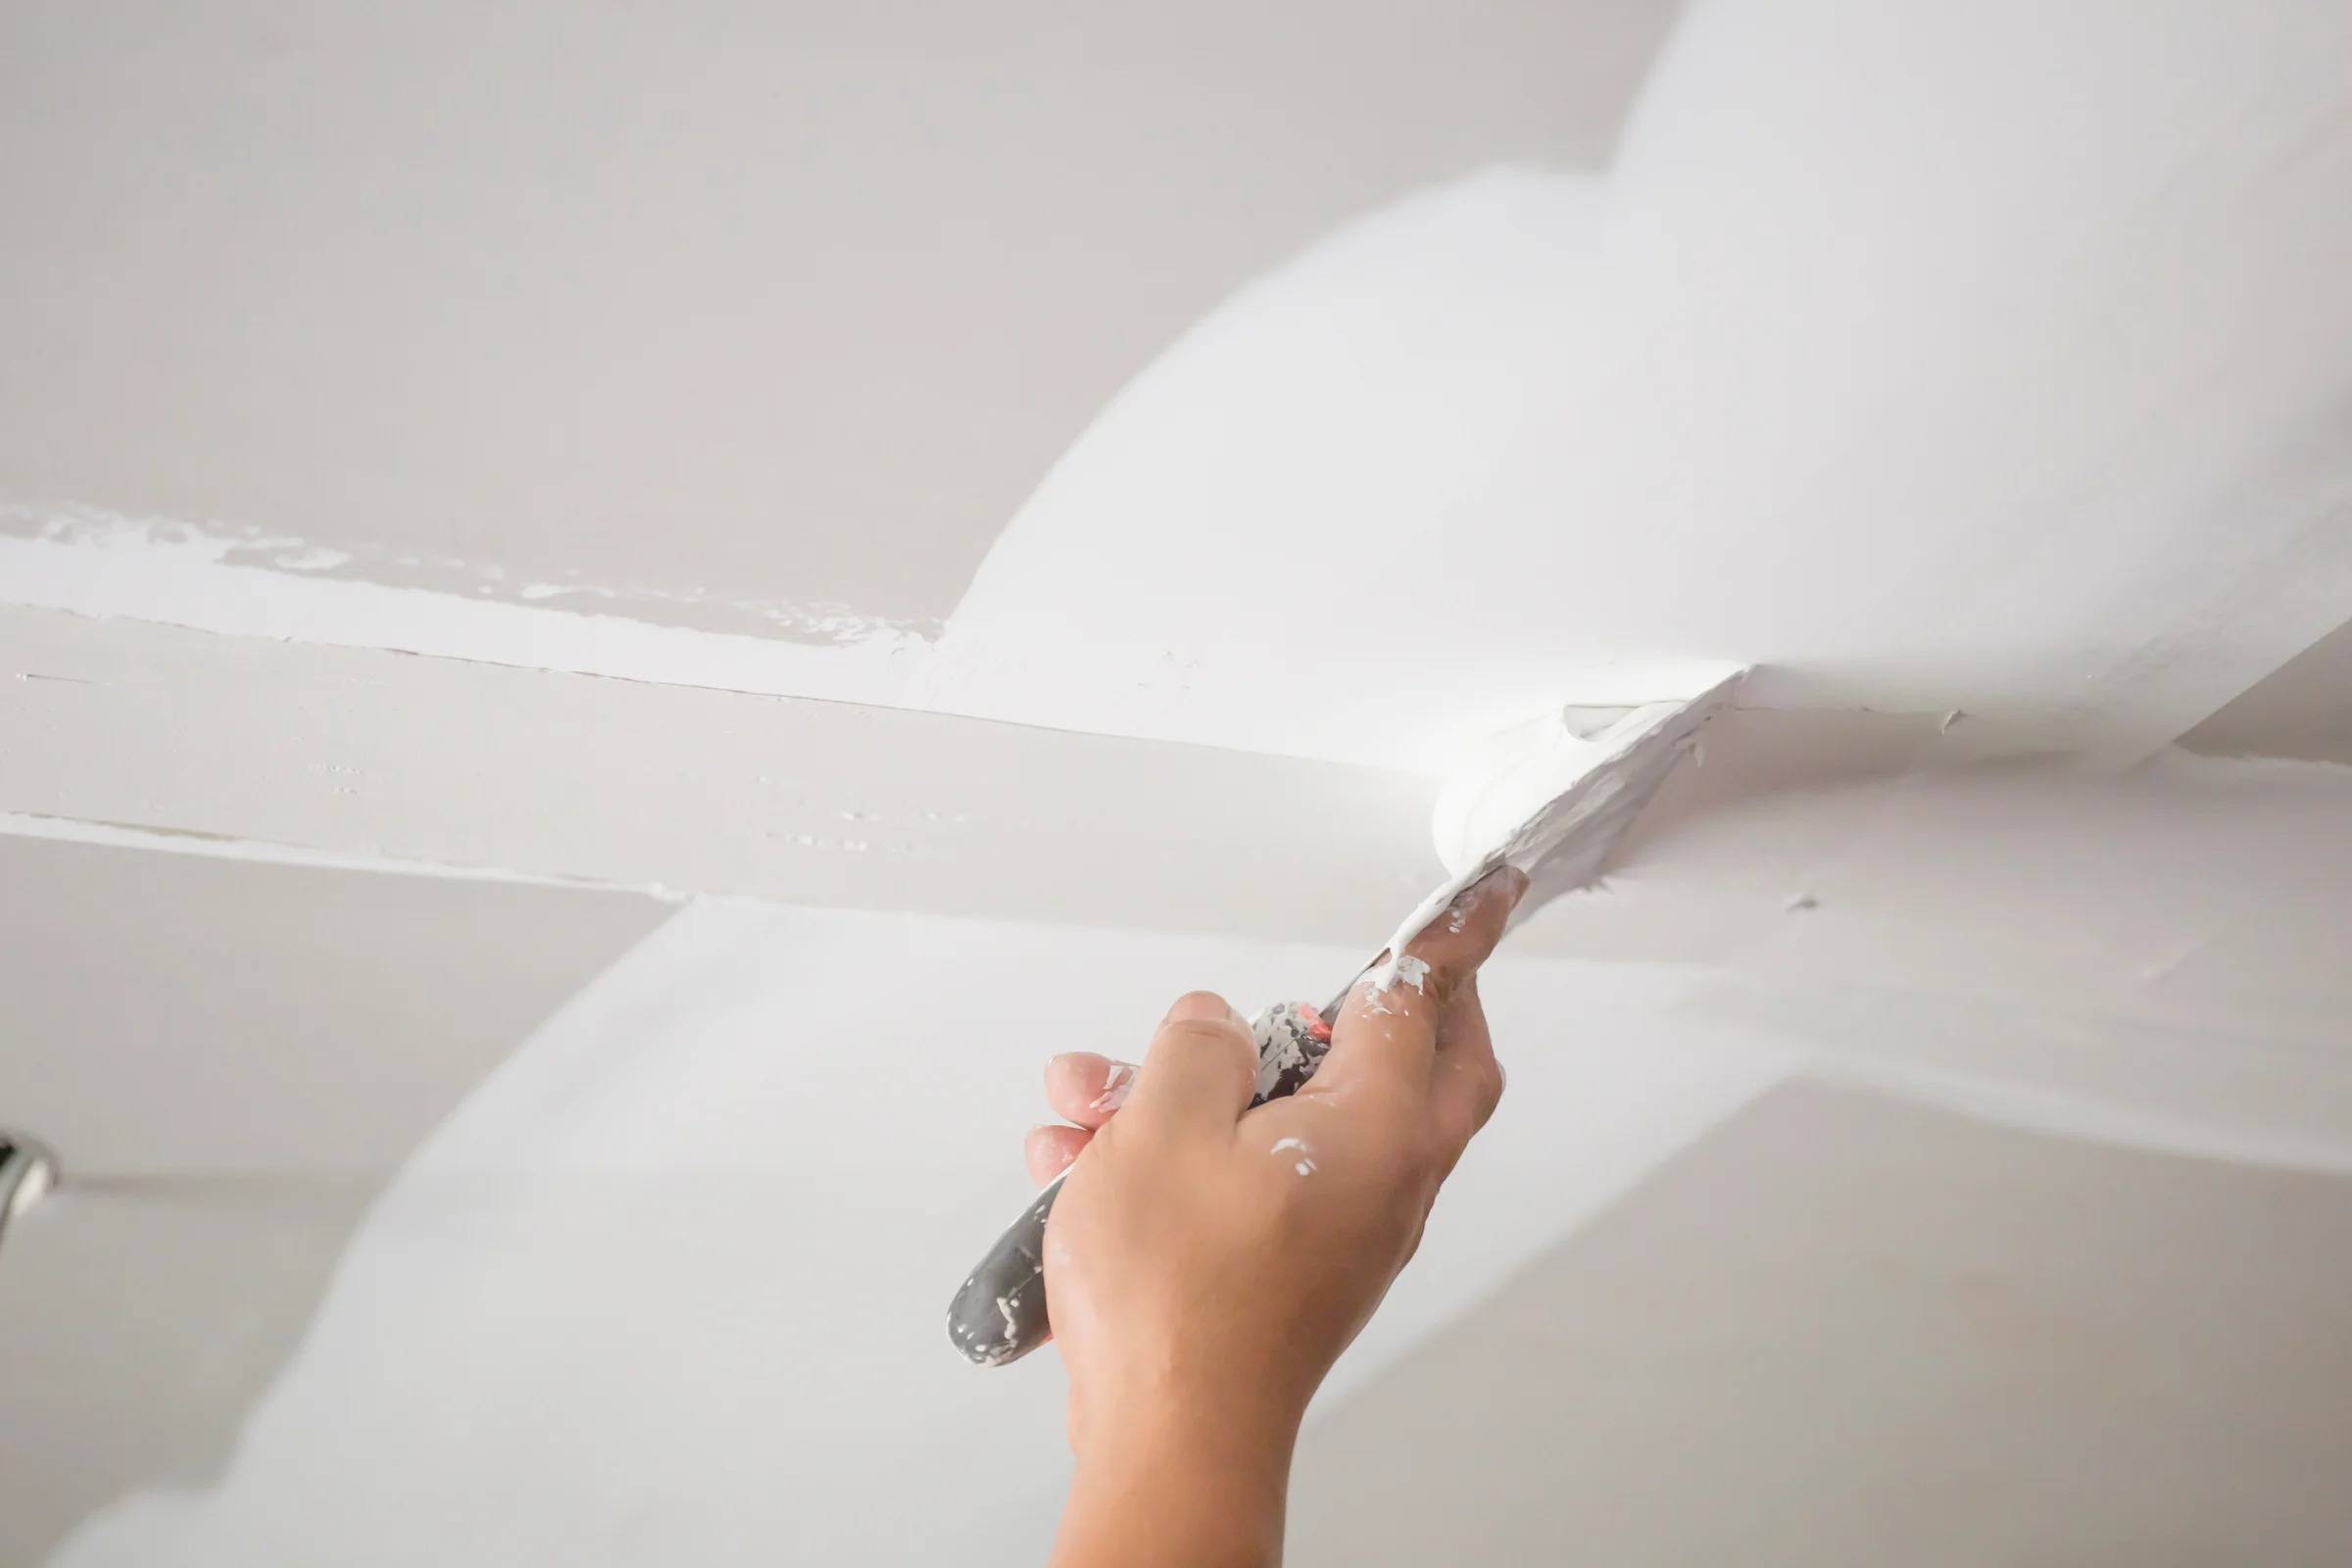 Шпаклевка потолка из гипсокартона под покраску своими руками: видео